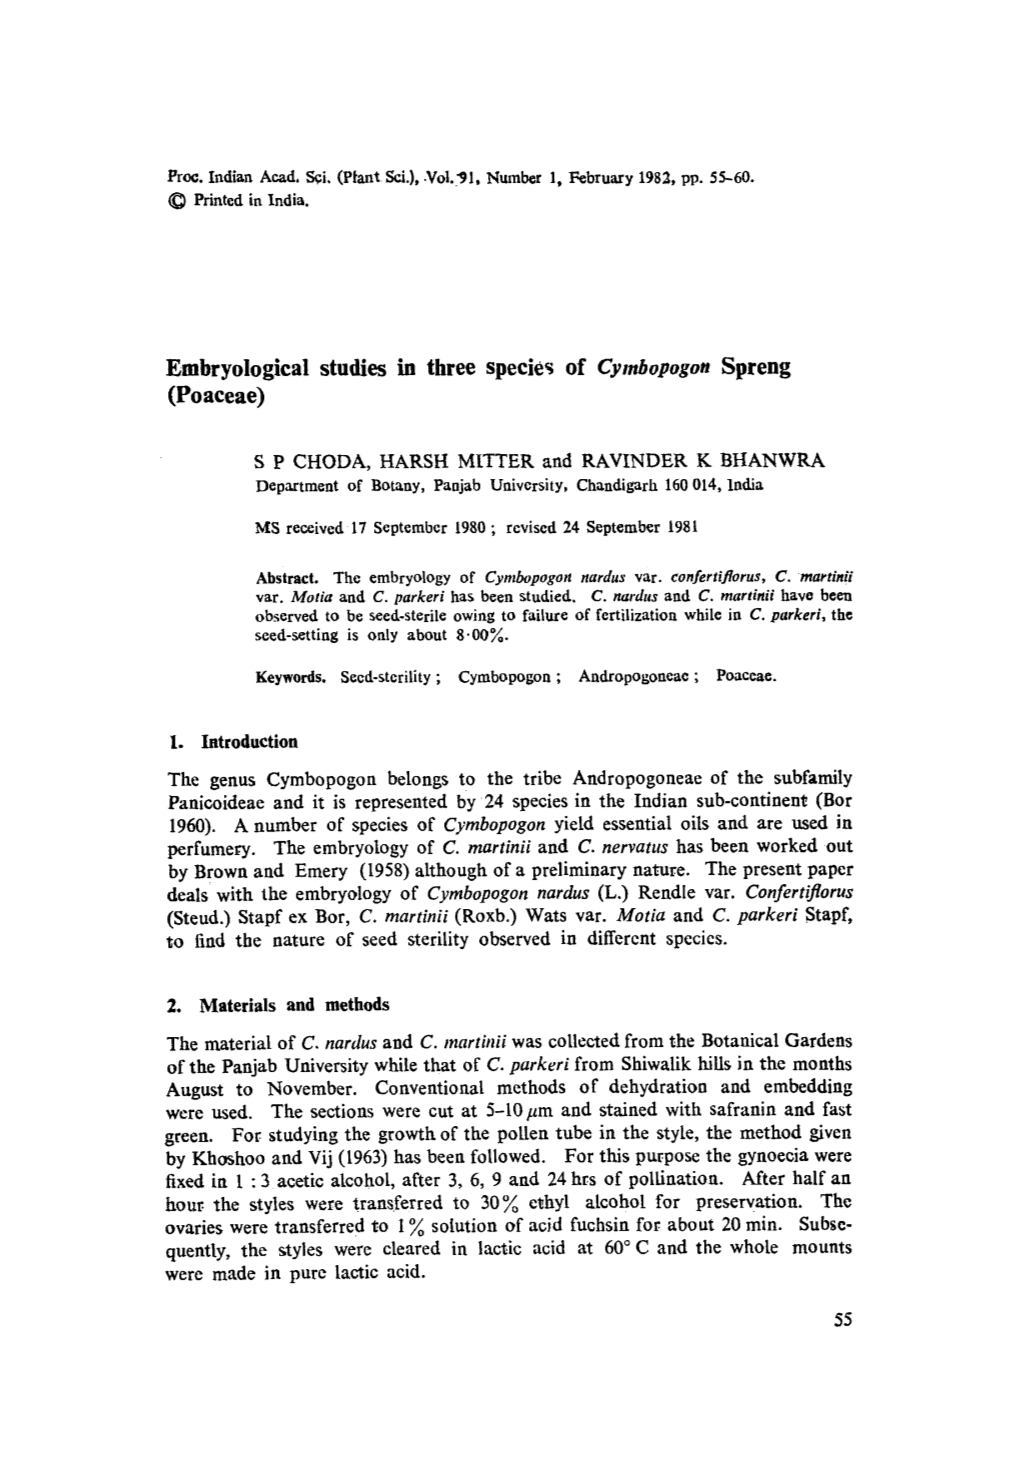 Embryological Studies in Three Species of Cymbopogon Spreng (Poaceae)